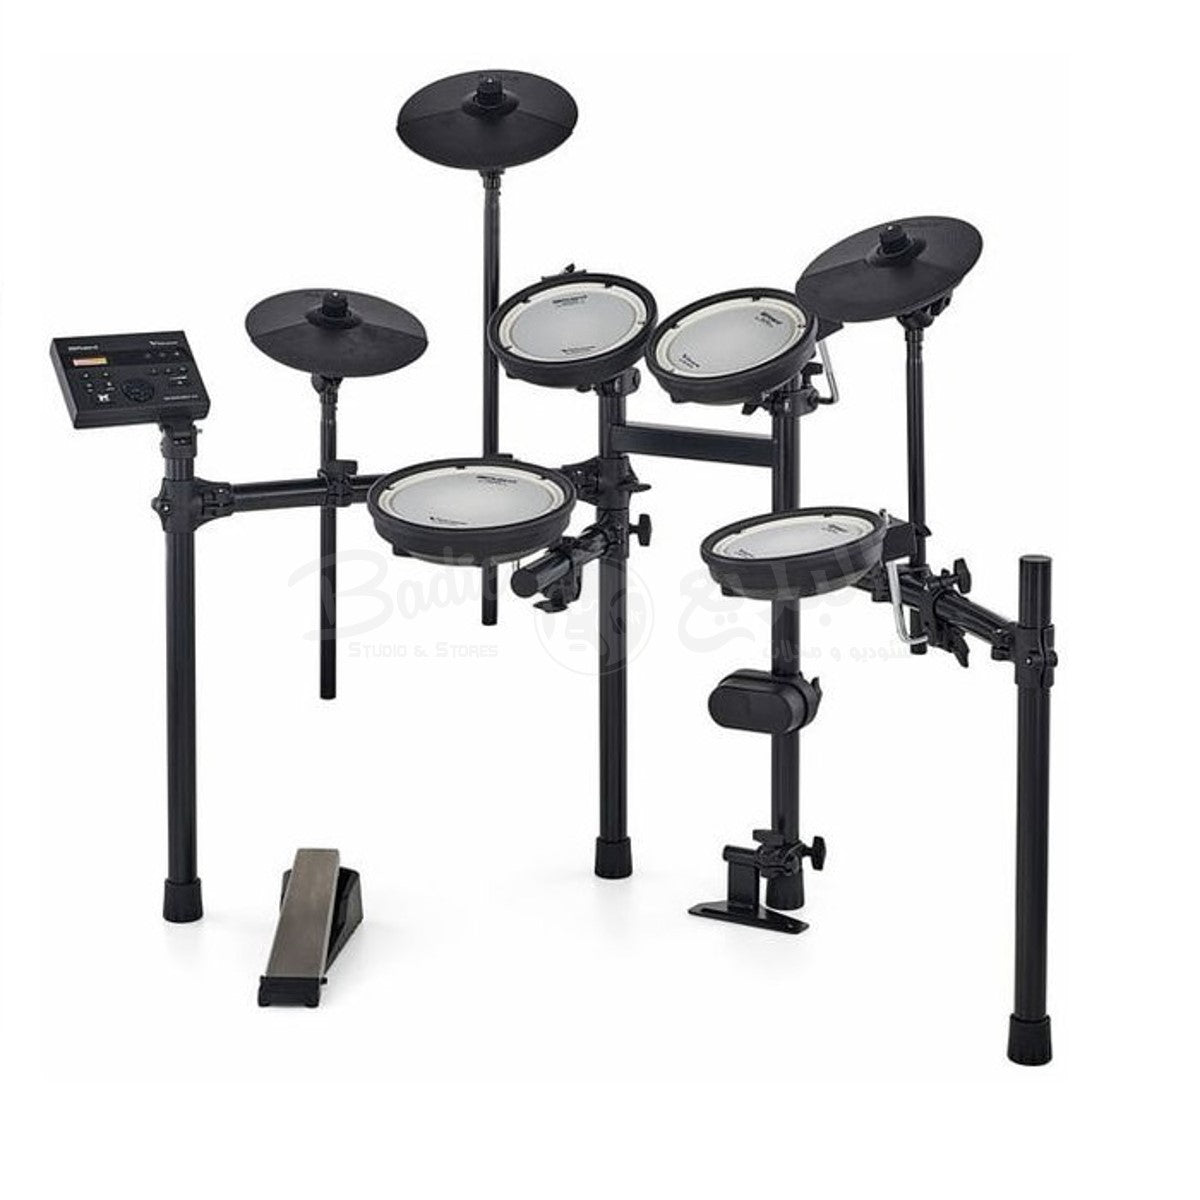 Roland V-Drums TD-07DMK 5-piece Electronic Drum Set | Musical Instruments | Musical Instruments, Musical Instruments. Musical Instruments: Acoustic / Electric Drums, Musical Instruments. Musical Instruments: Electronic Drums | Roland